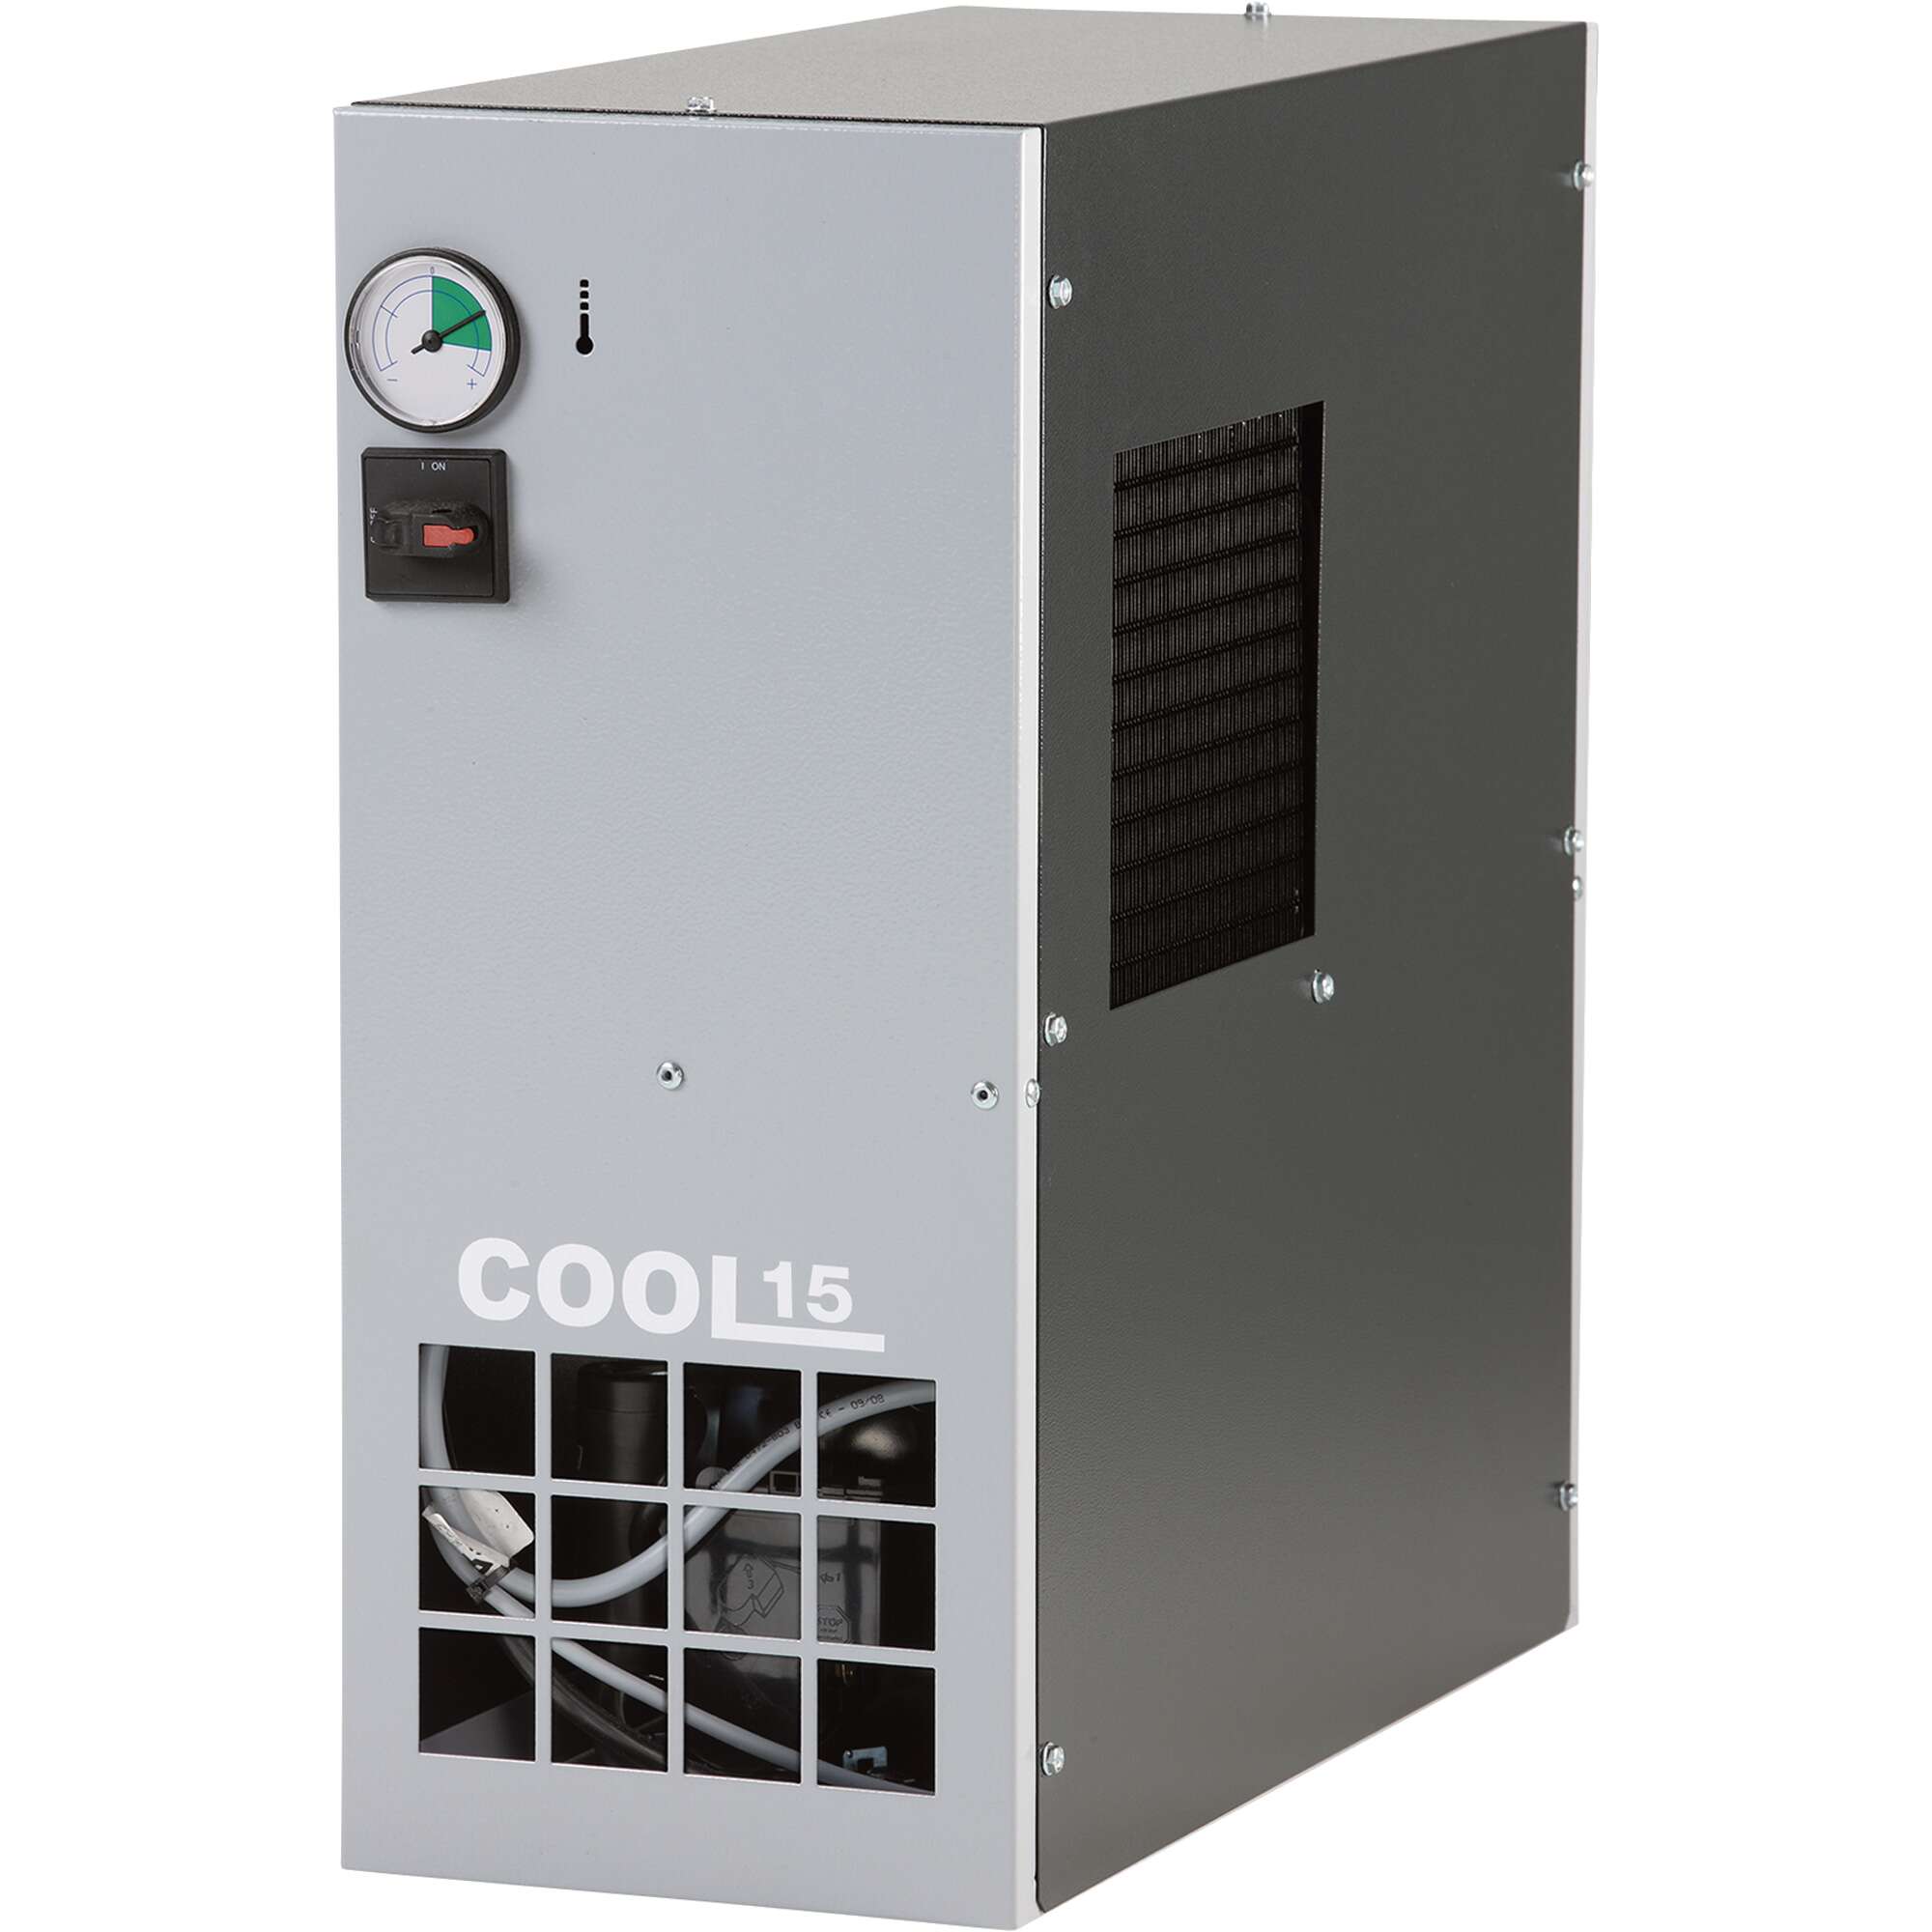 COOLAIR Refrigerated Dryer 15 CFM 115 Volt